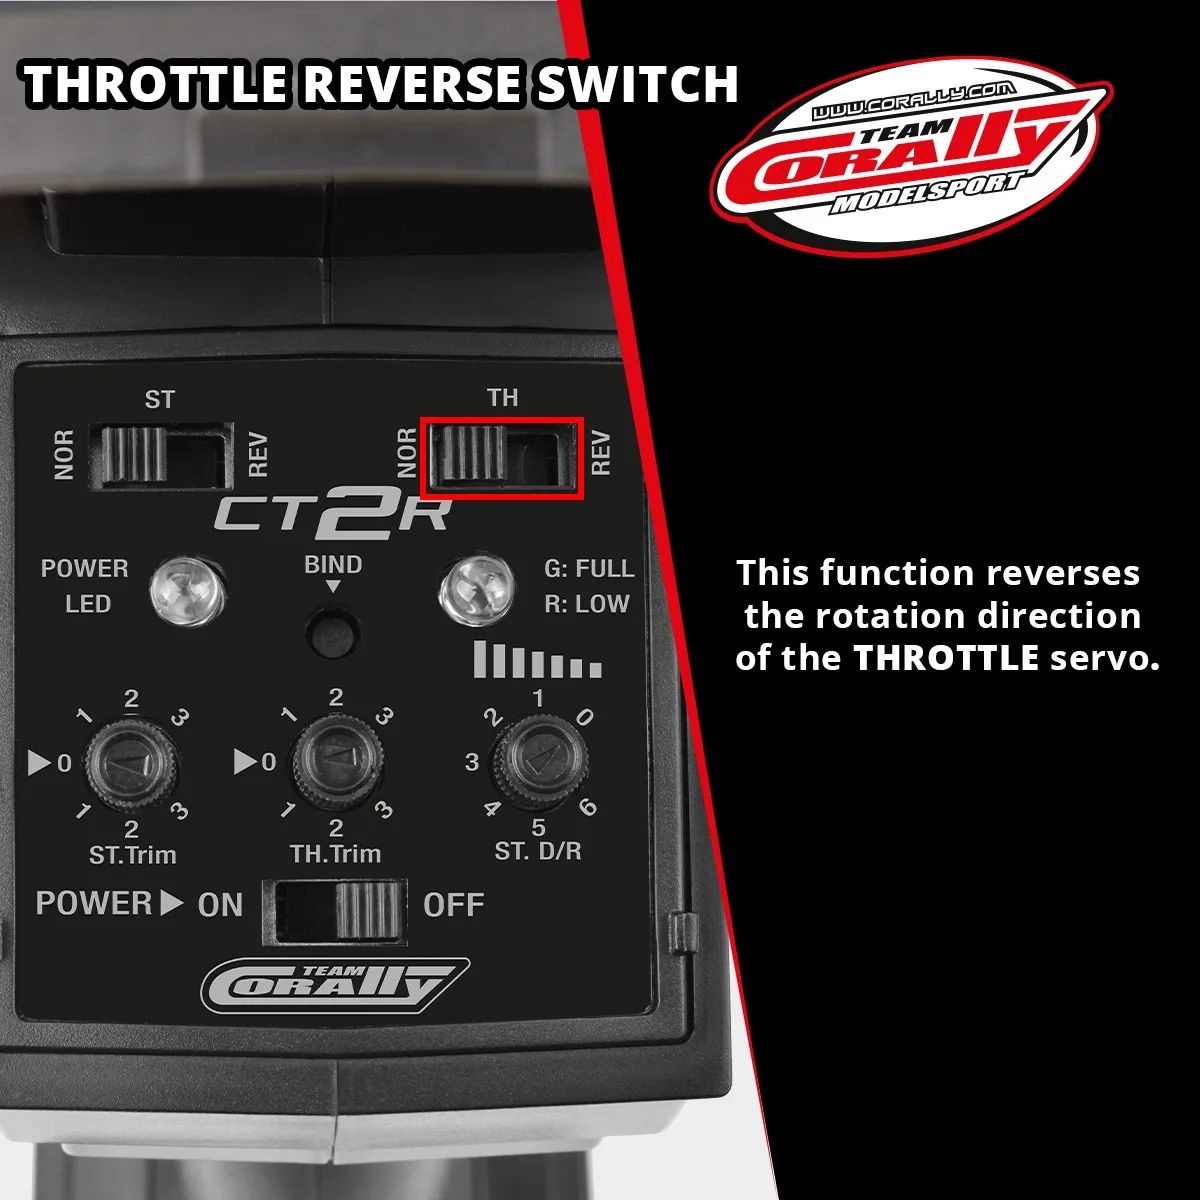 corally-ct2r-throttle-reverse-switch.jpg